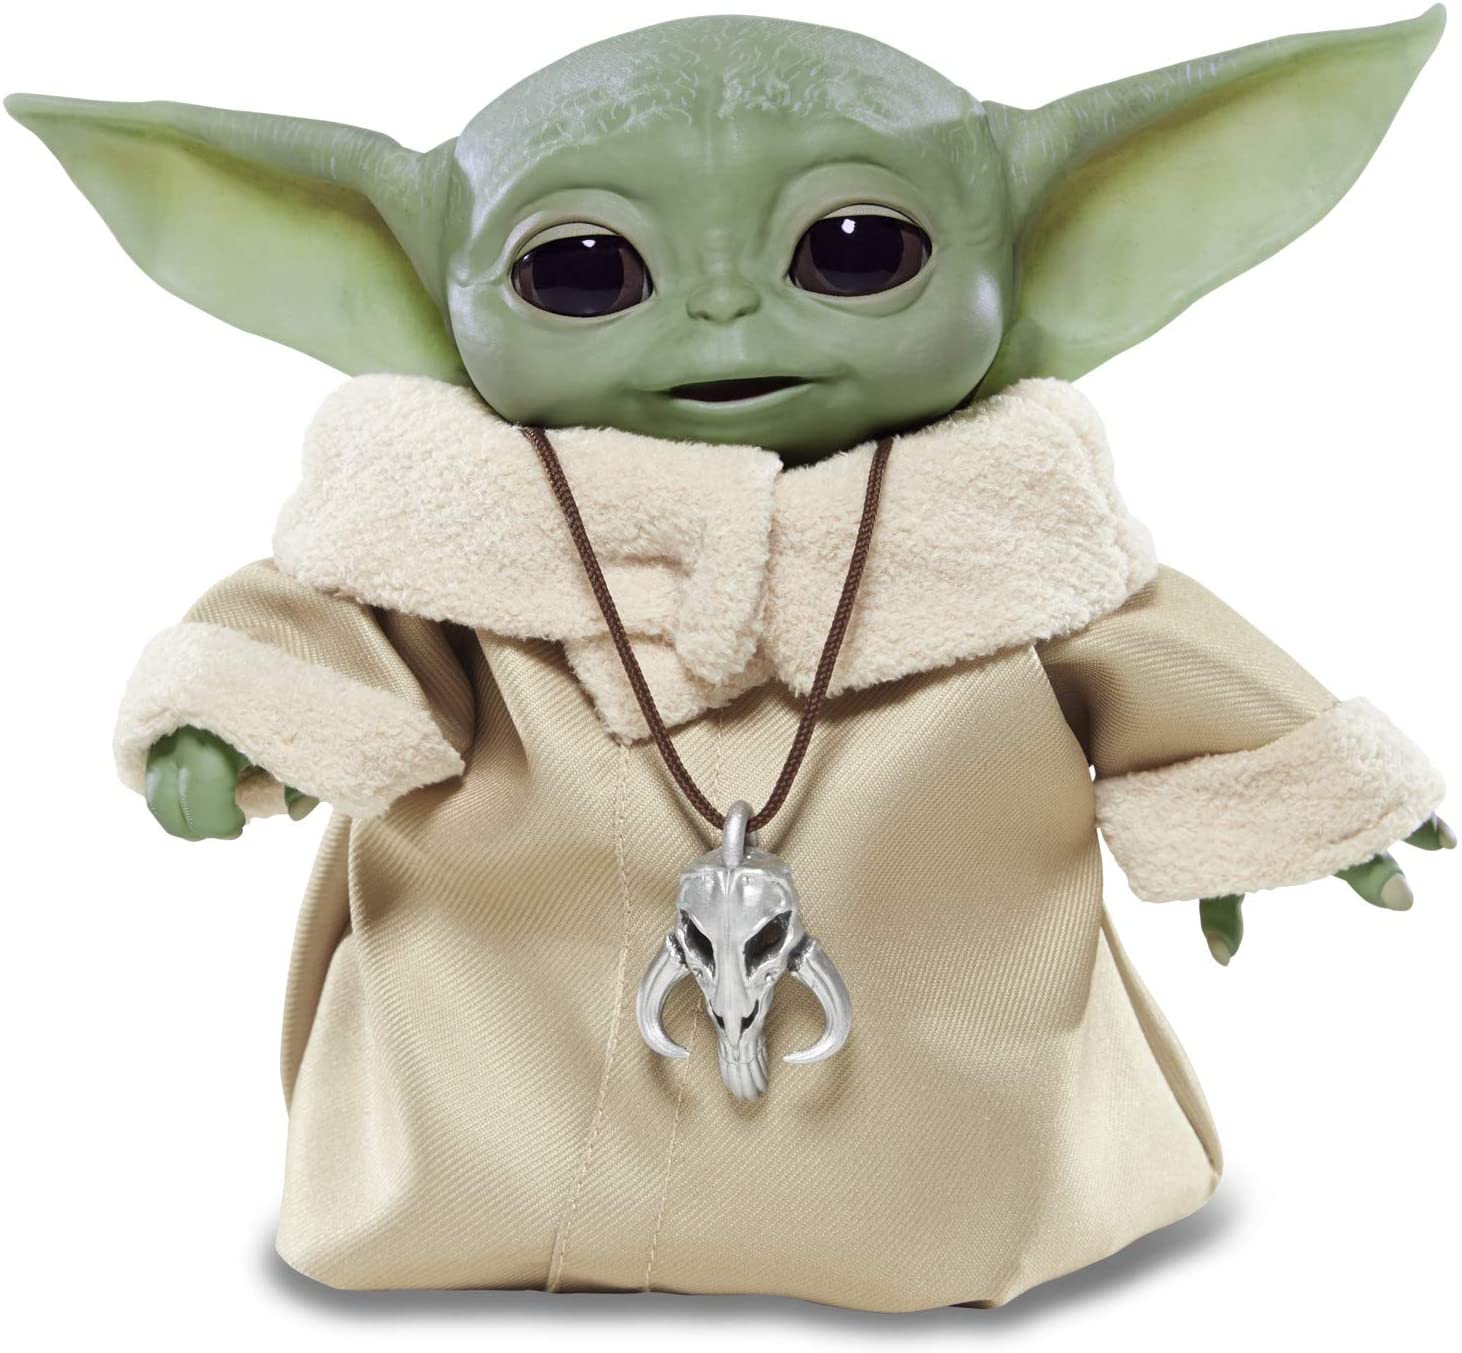 Star Wars The Child Animatronic Edition “AKA Baby Yoda”